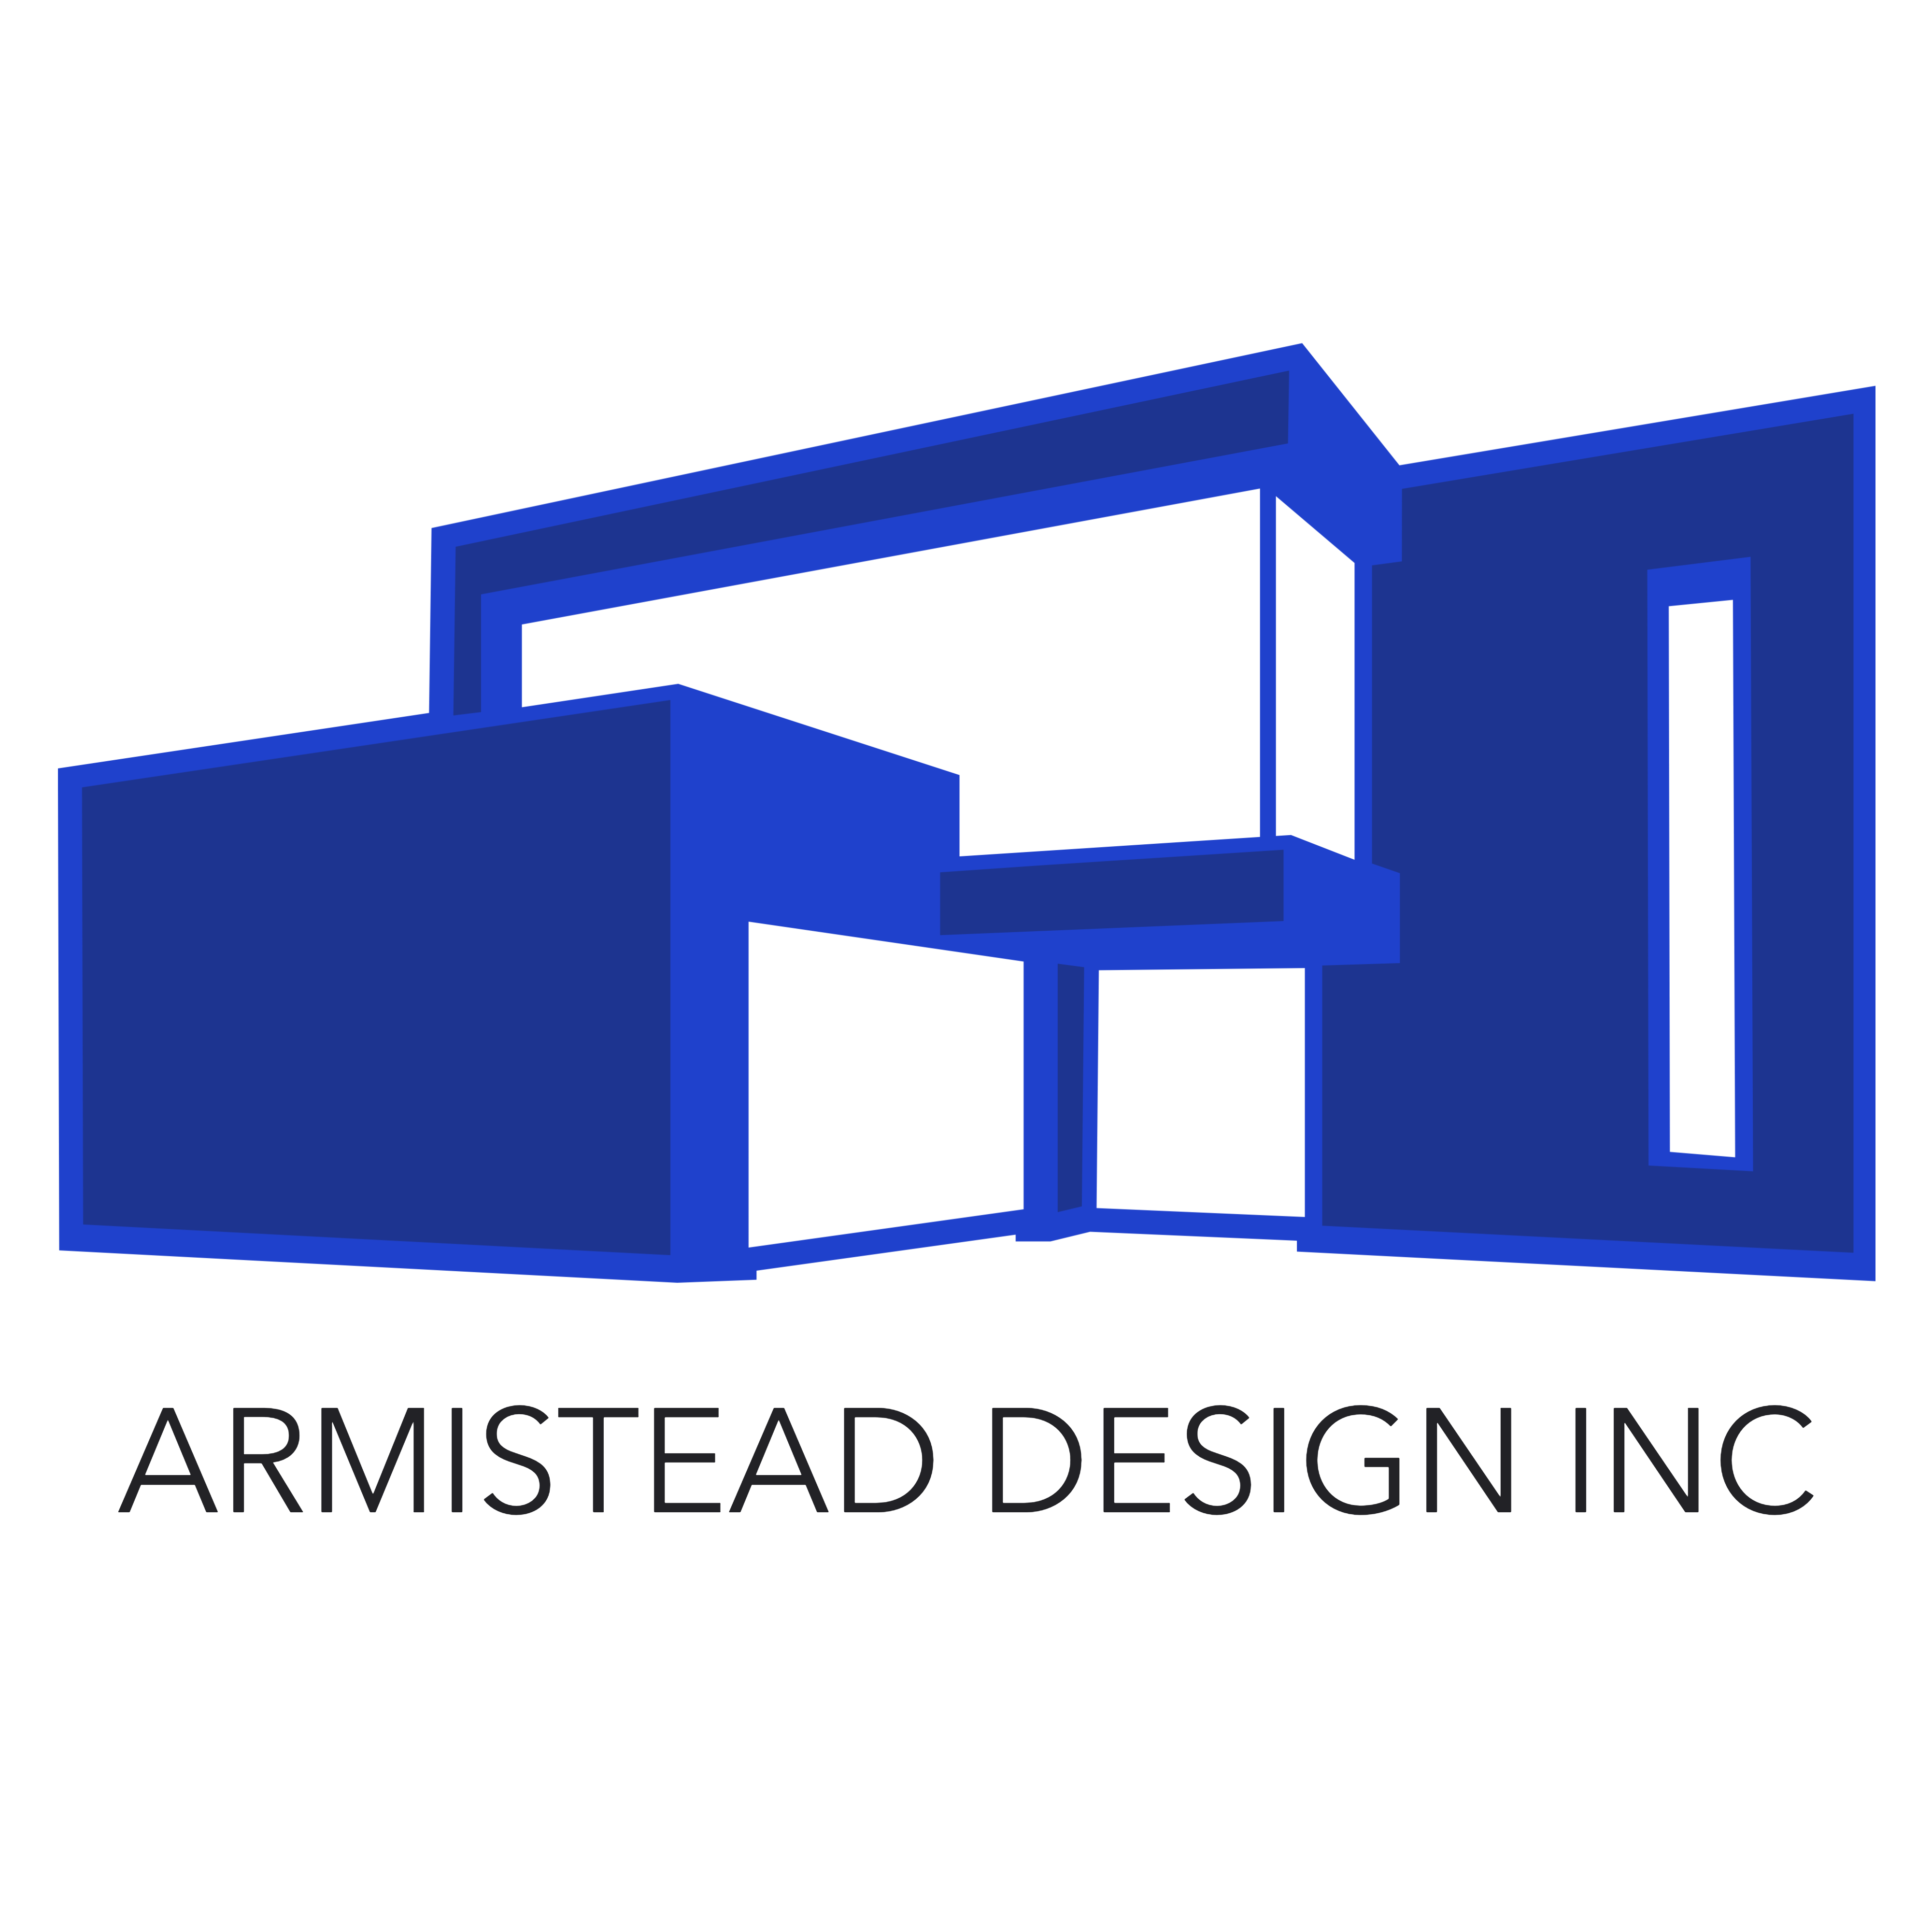 Armistead Design Inc Logo